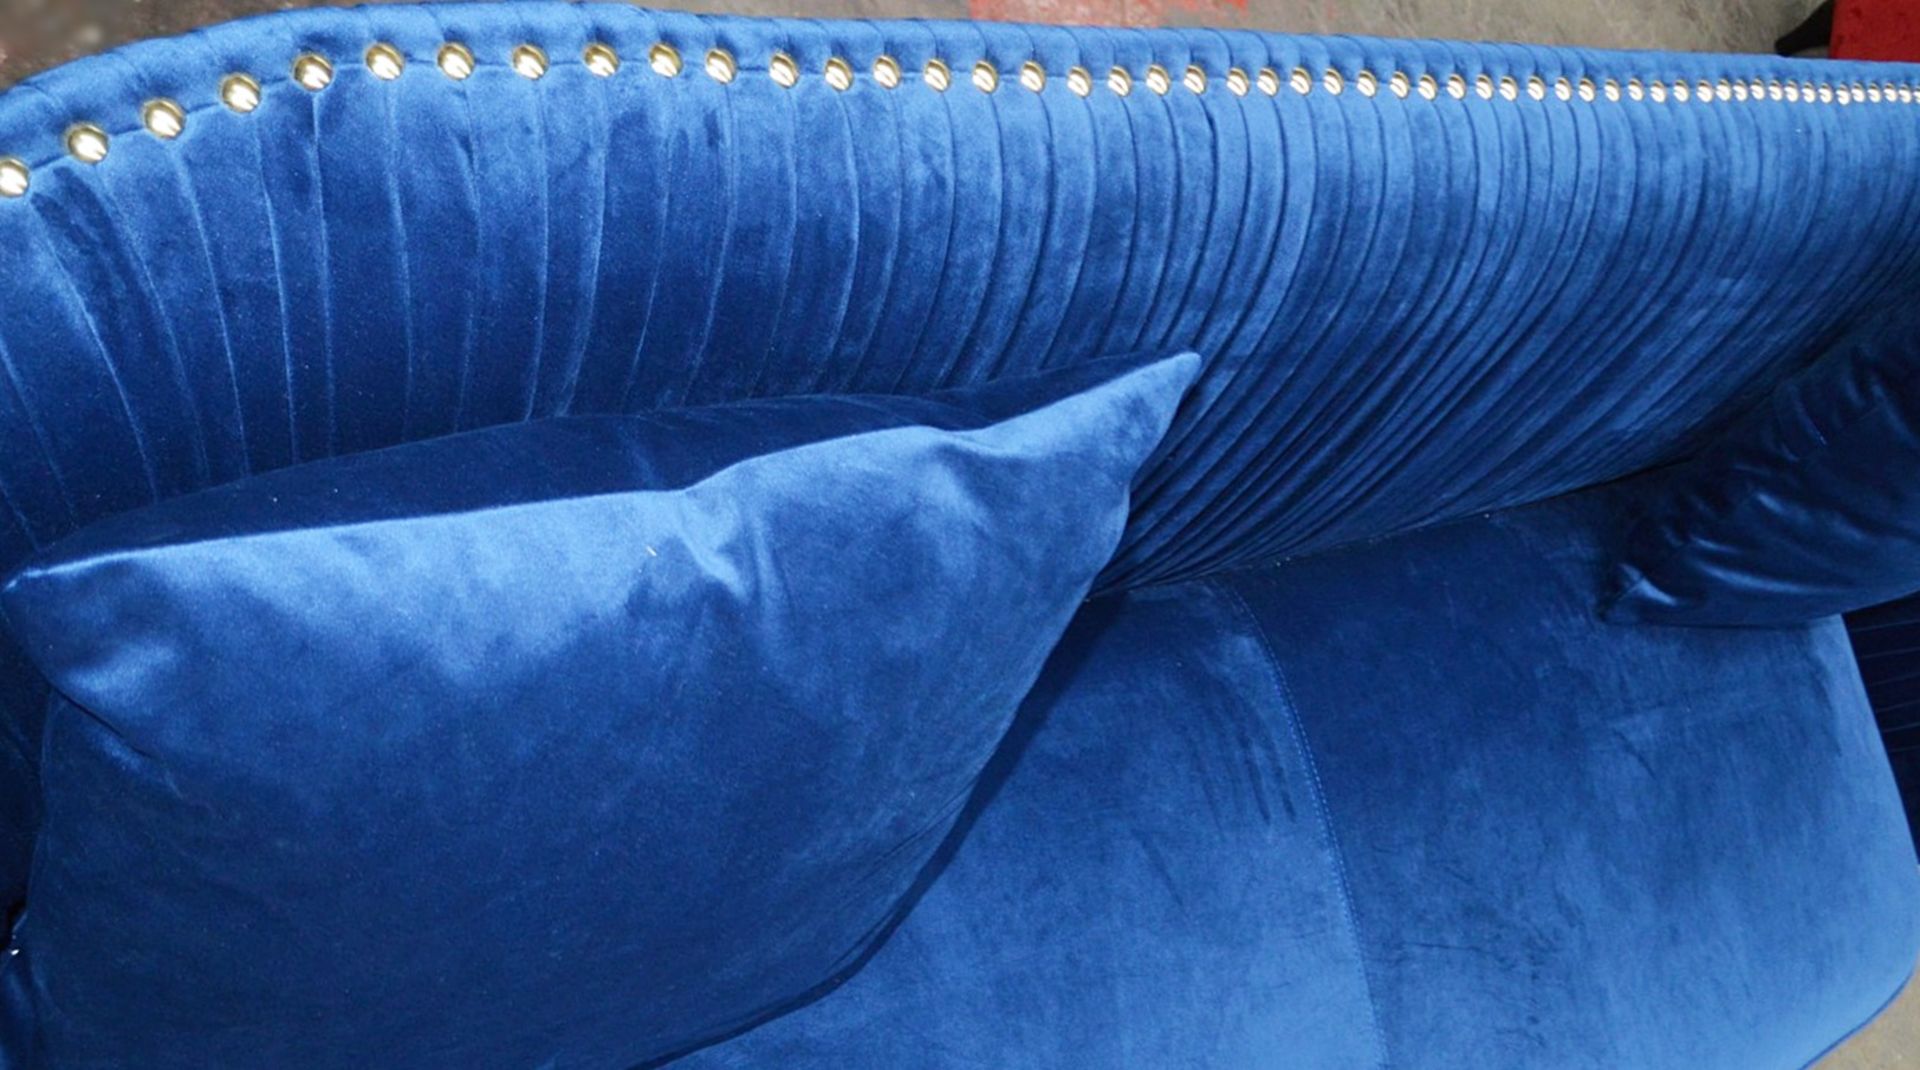 1 x Bespoke Blue Velvet Button-Back Sofa In A Rich Royal Blue Velvet With Detailing In Gold - Image 5 of 8